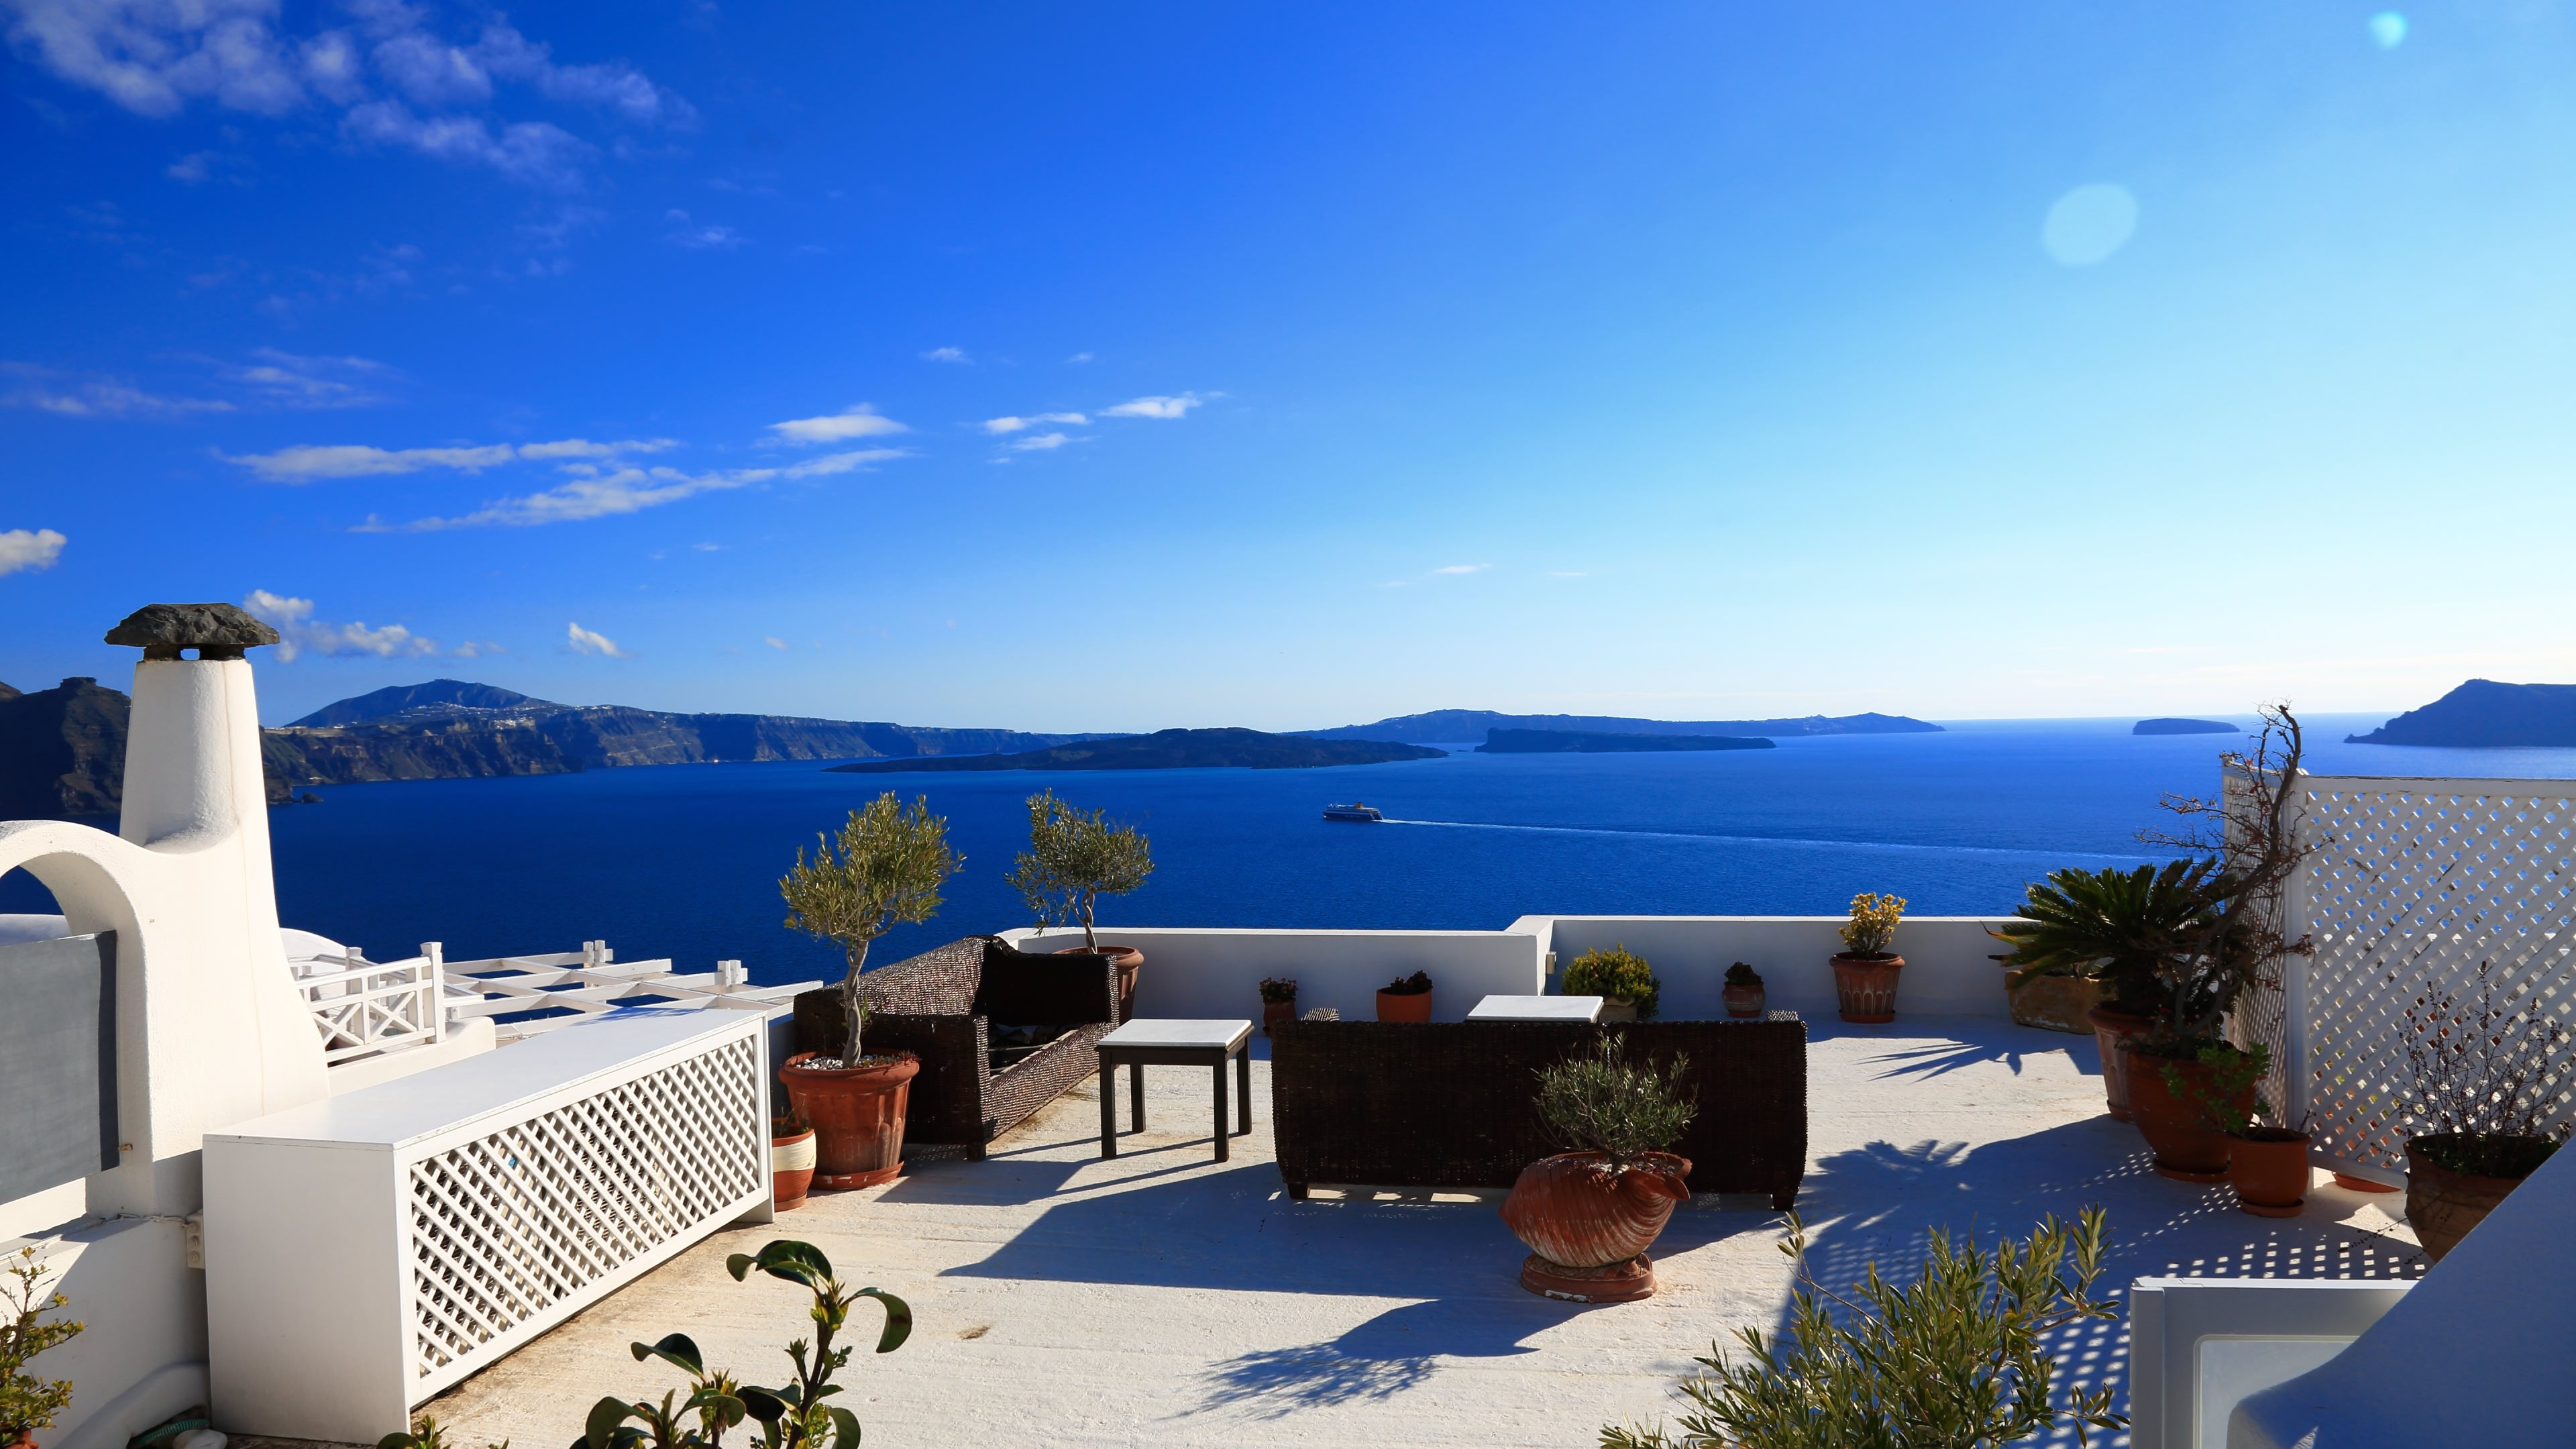 Mediterranean Sea, Santorini beauty, Postcard-worthy, Greek charm, 3840x2160 4K Desktop